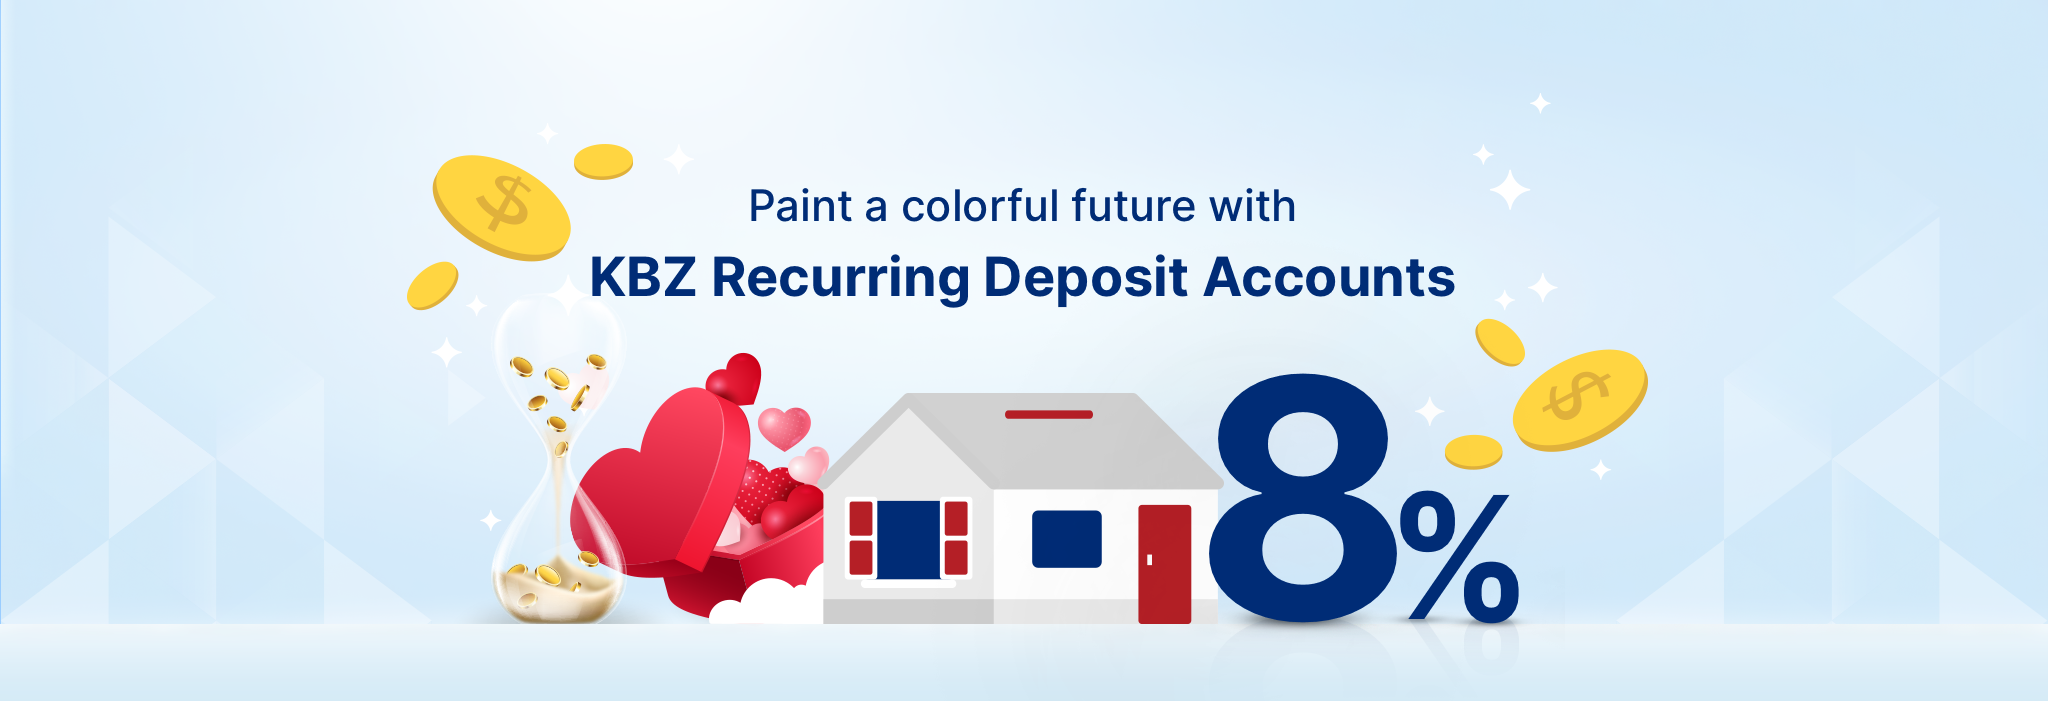 KBZ Recurring Deposit Account